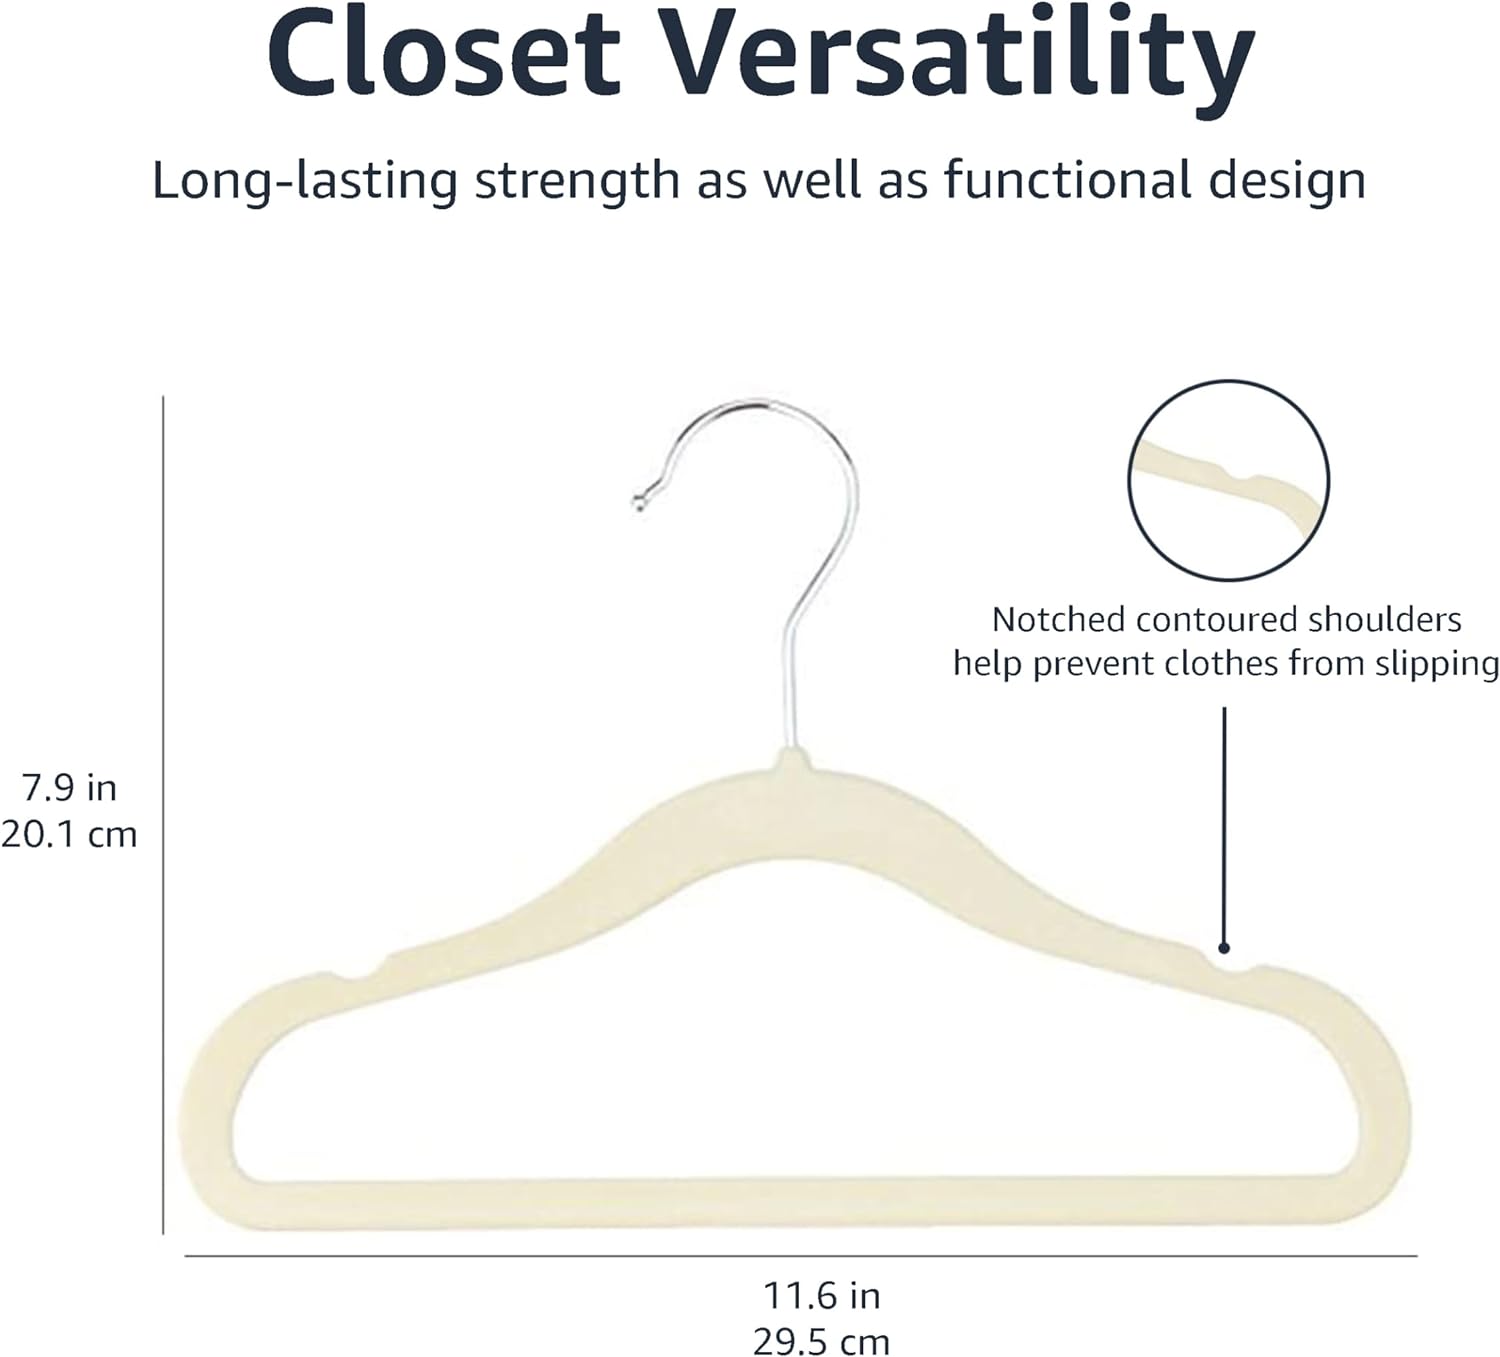 Amazon Basics Hangers,50-Pack, Beige 7740